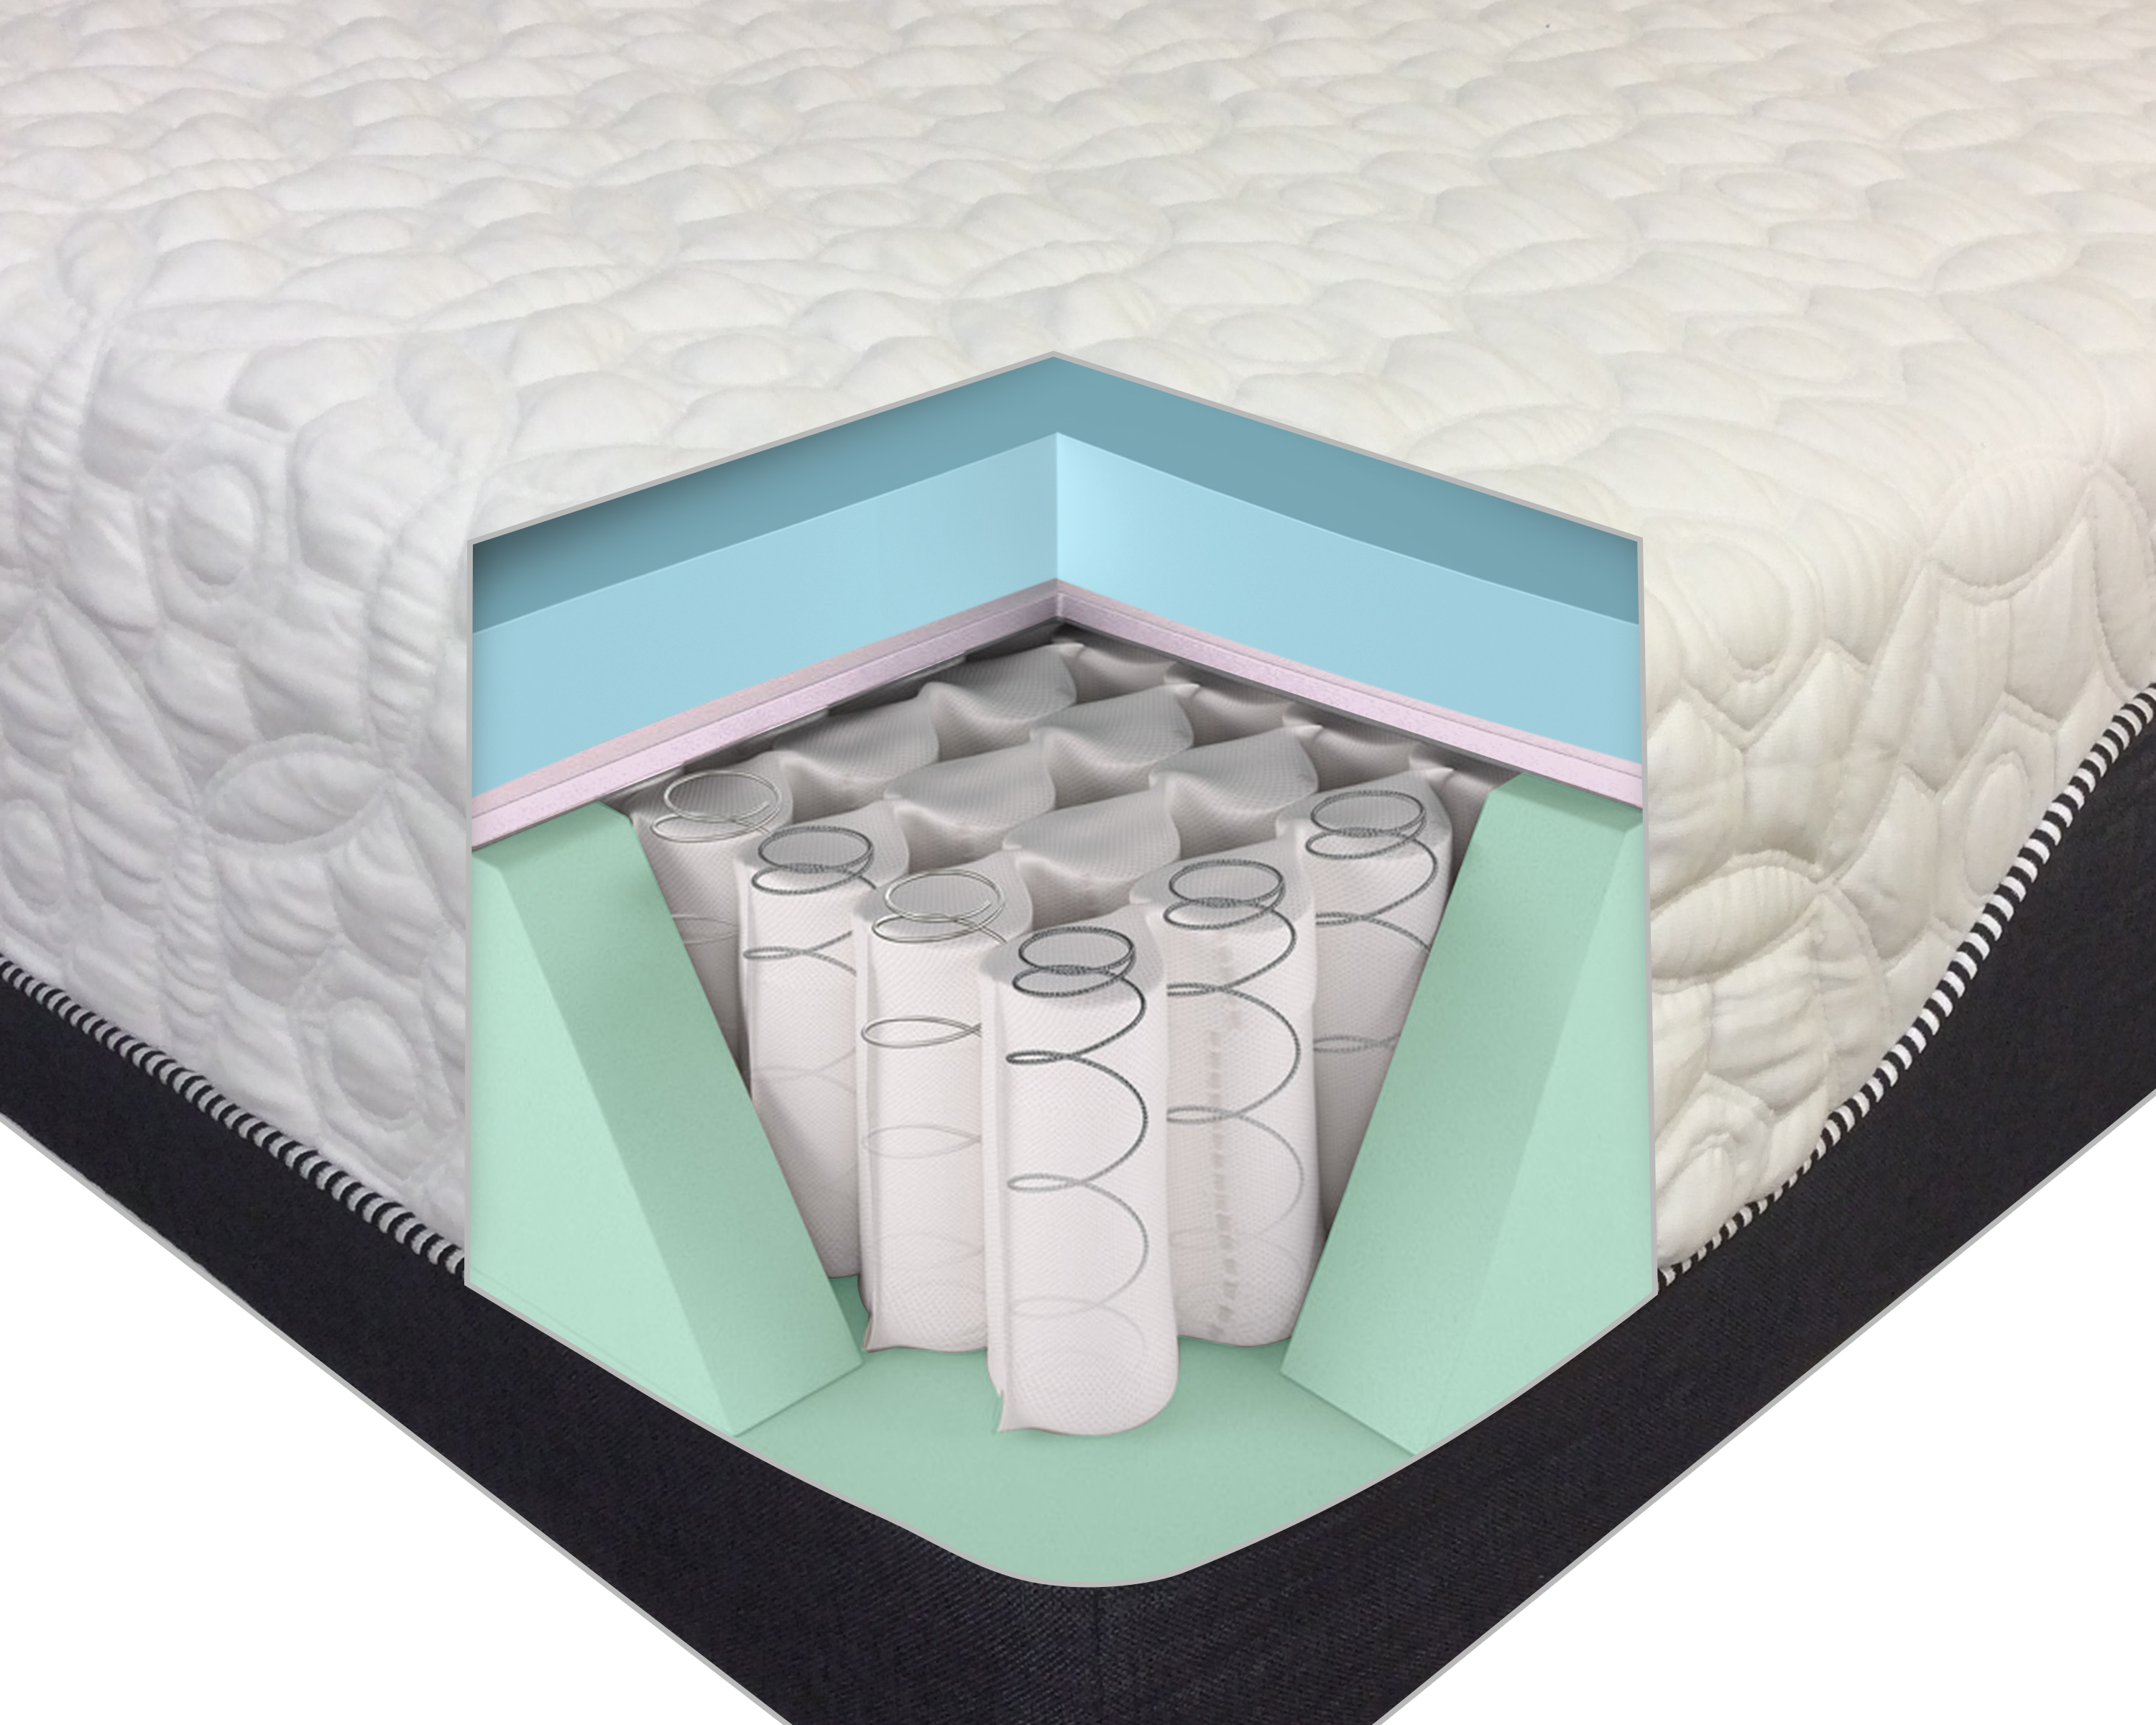 coil spring or foam mattress